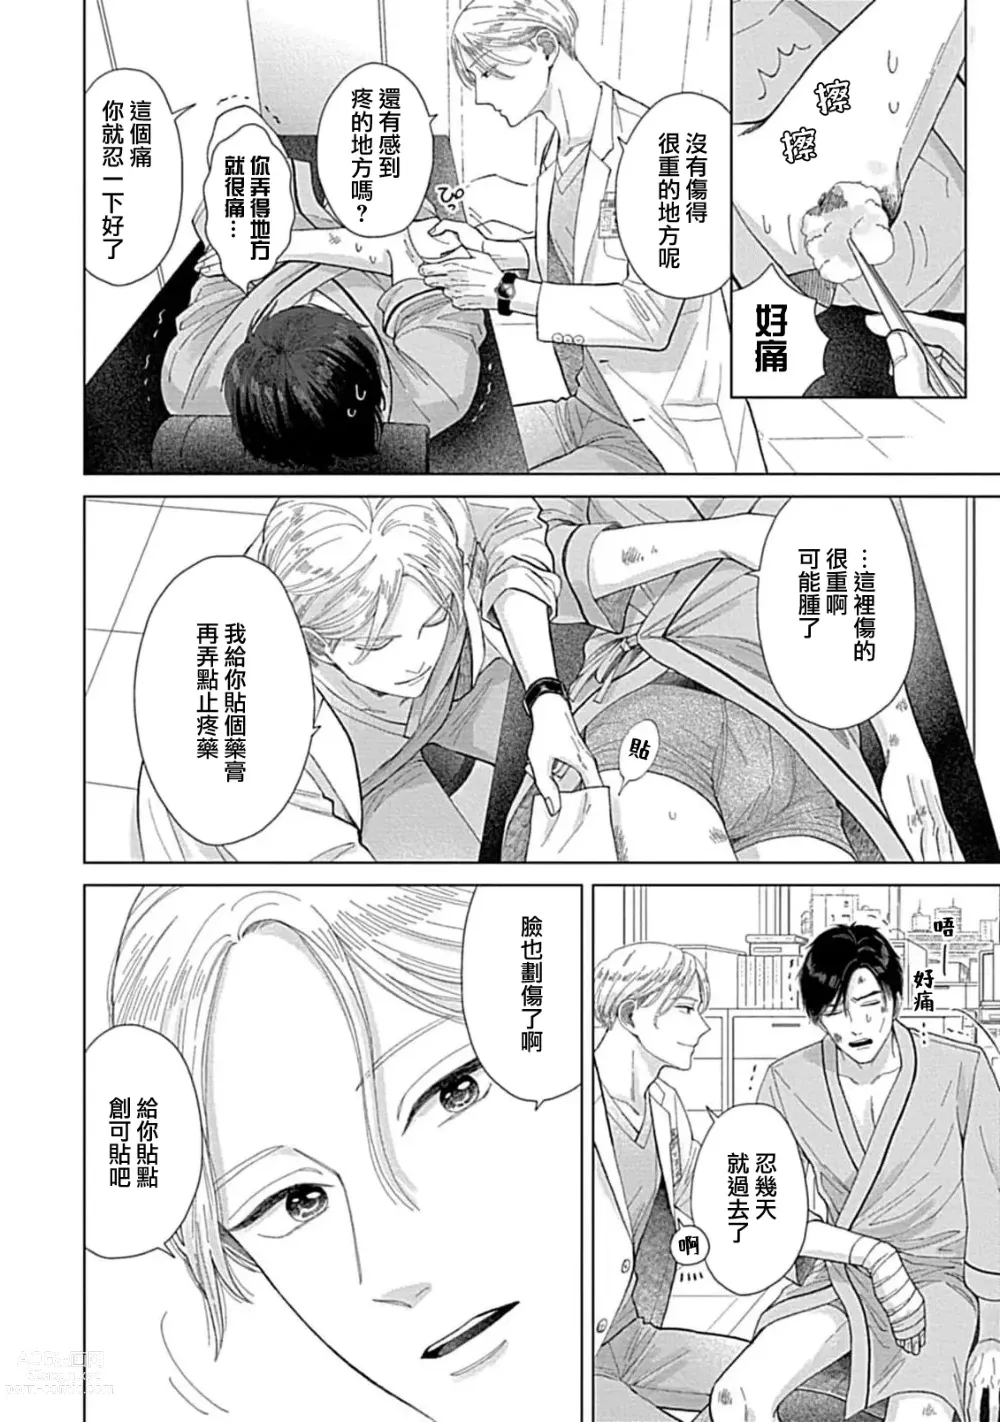 Page 8 of manga 并非不喜但请抱紧1